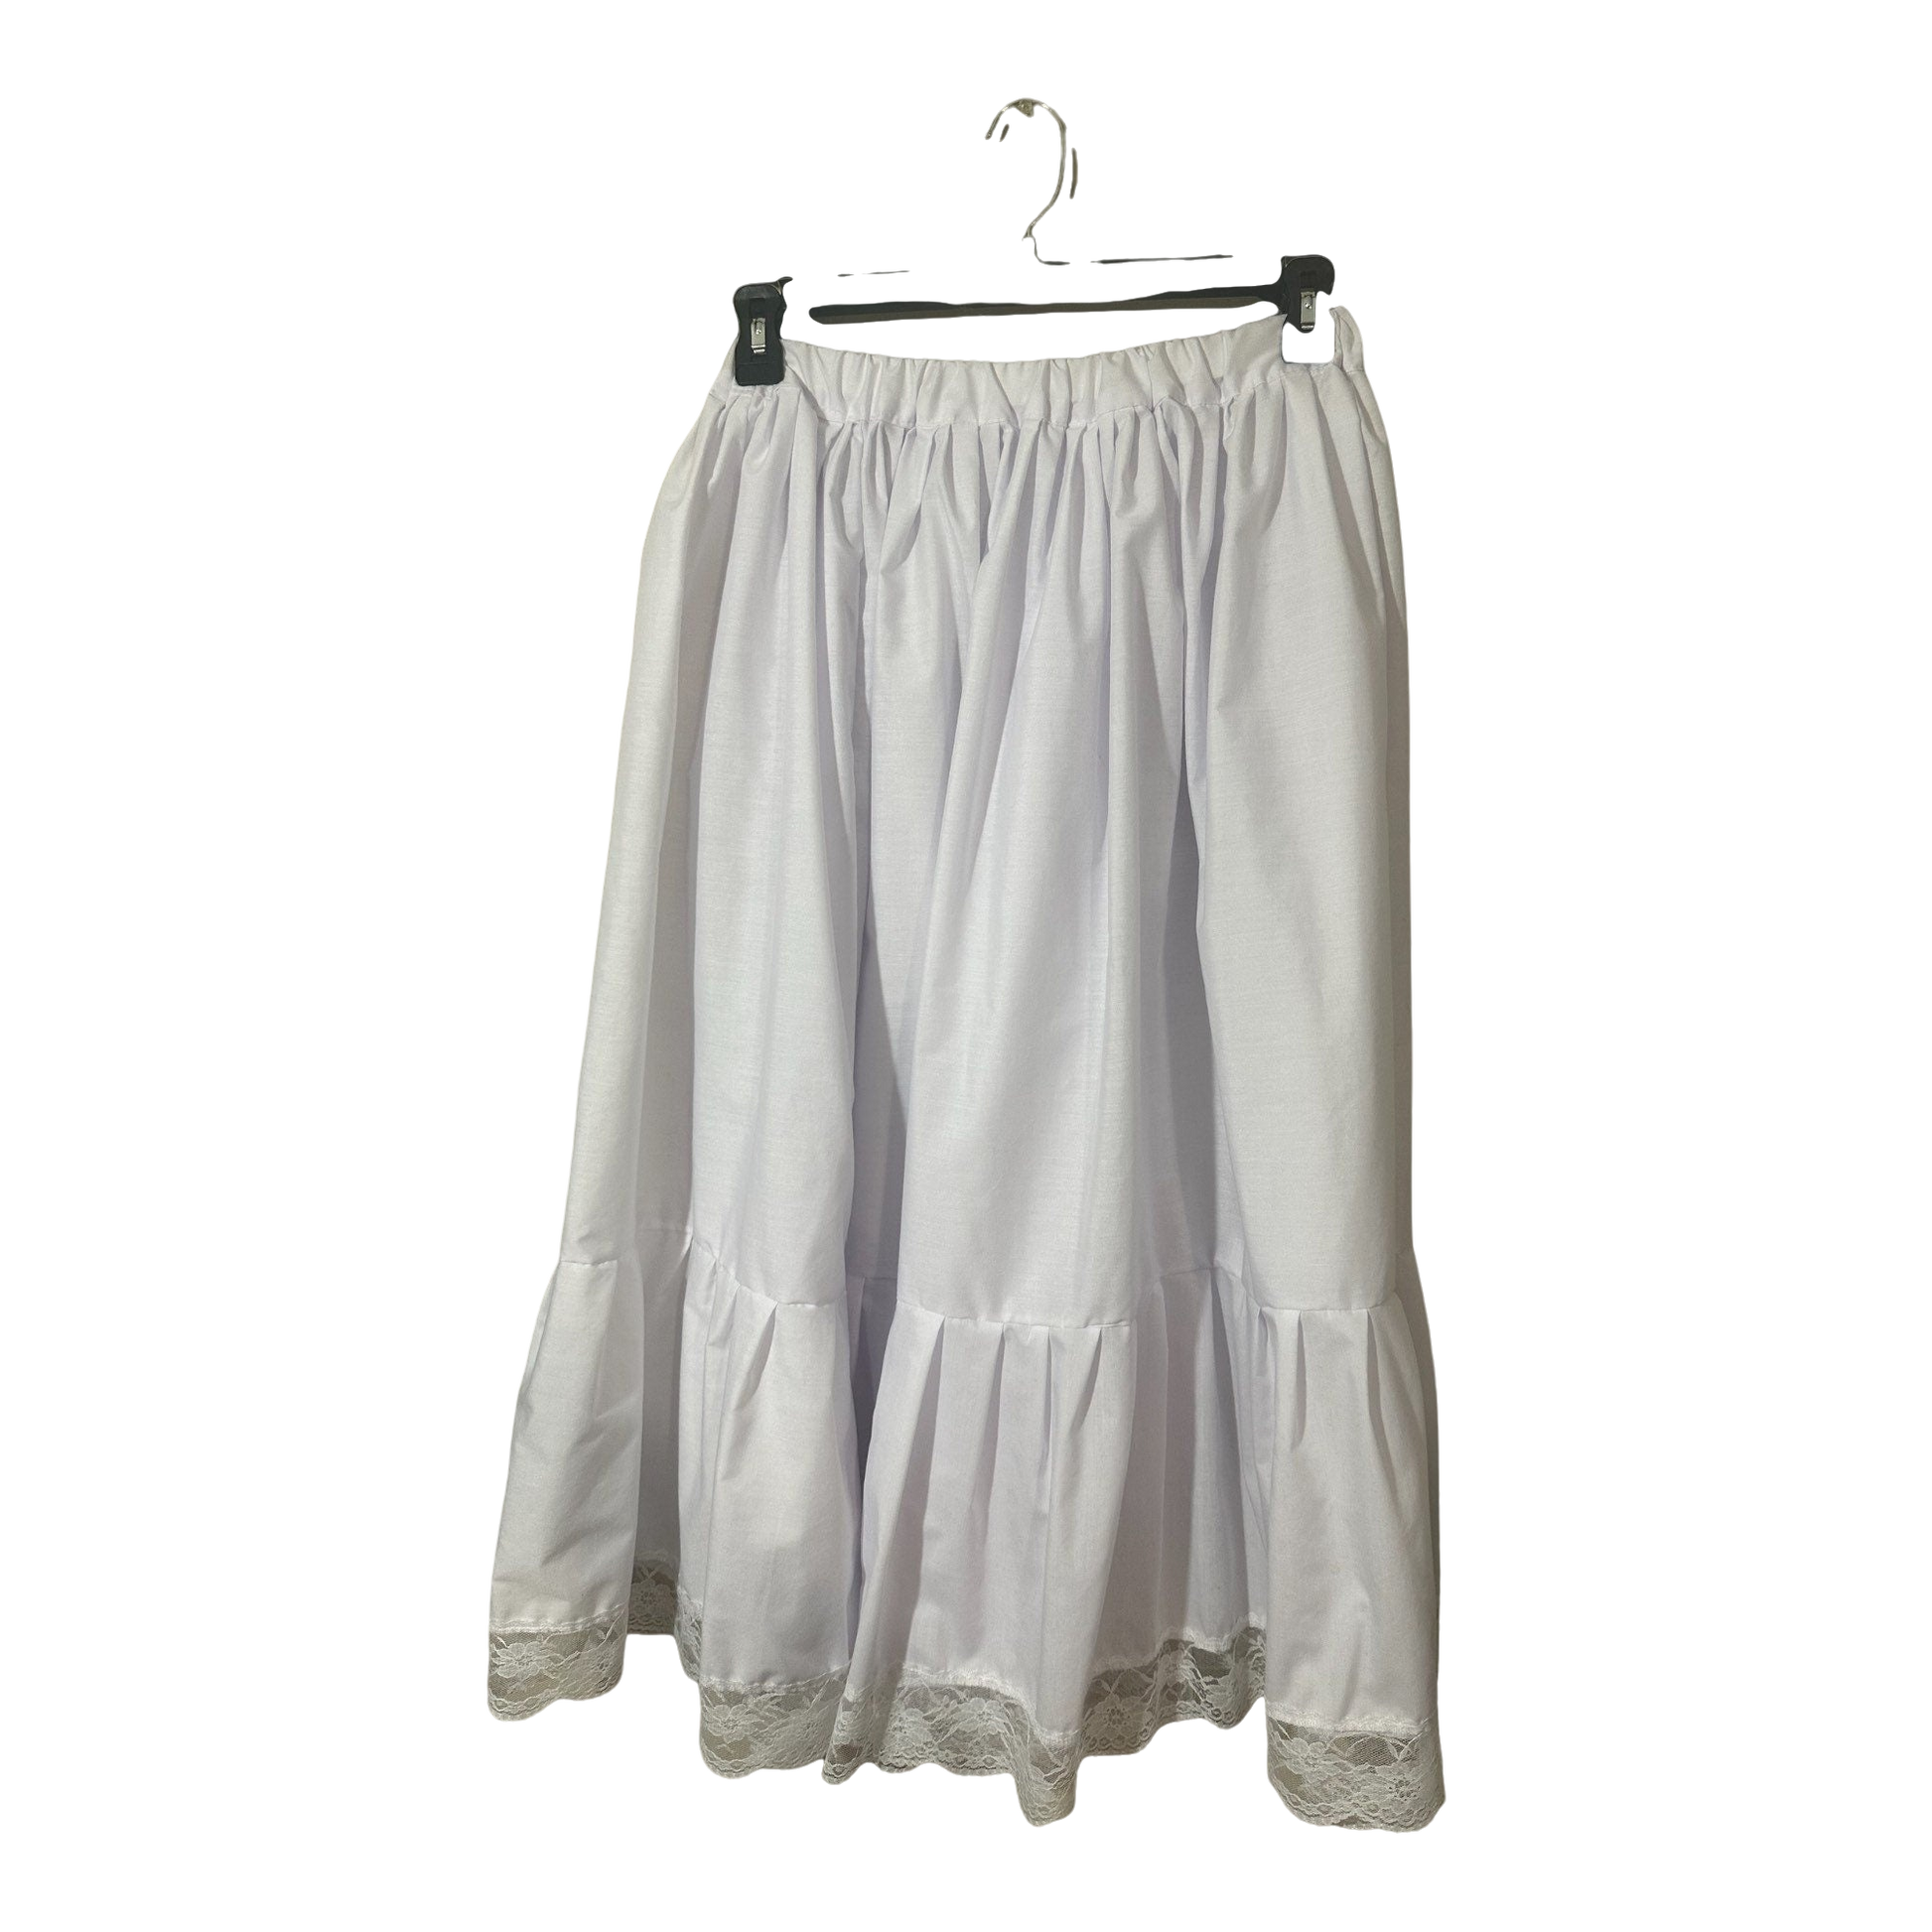 Petticoat, Enagua Skirt - Vivian Fong Designs